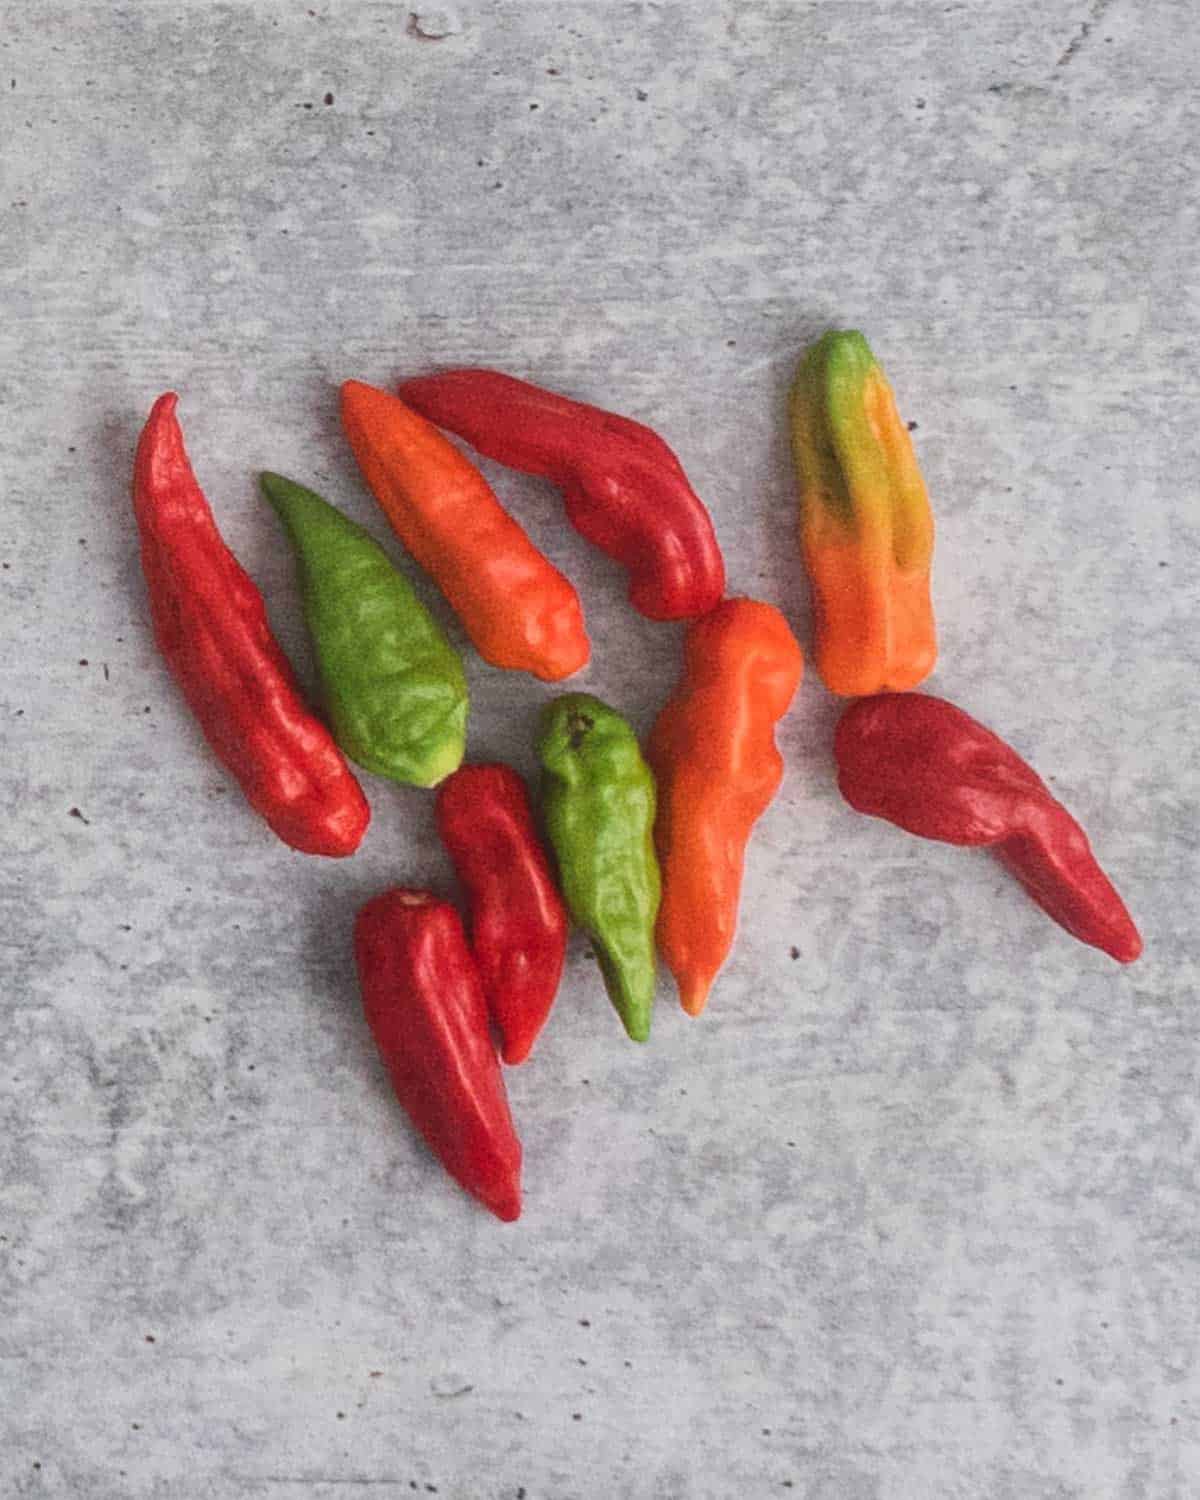 Ten small peppers or aji de colores.